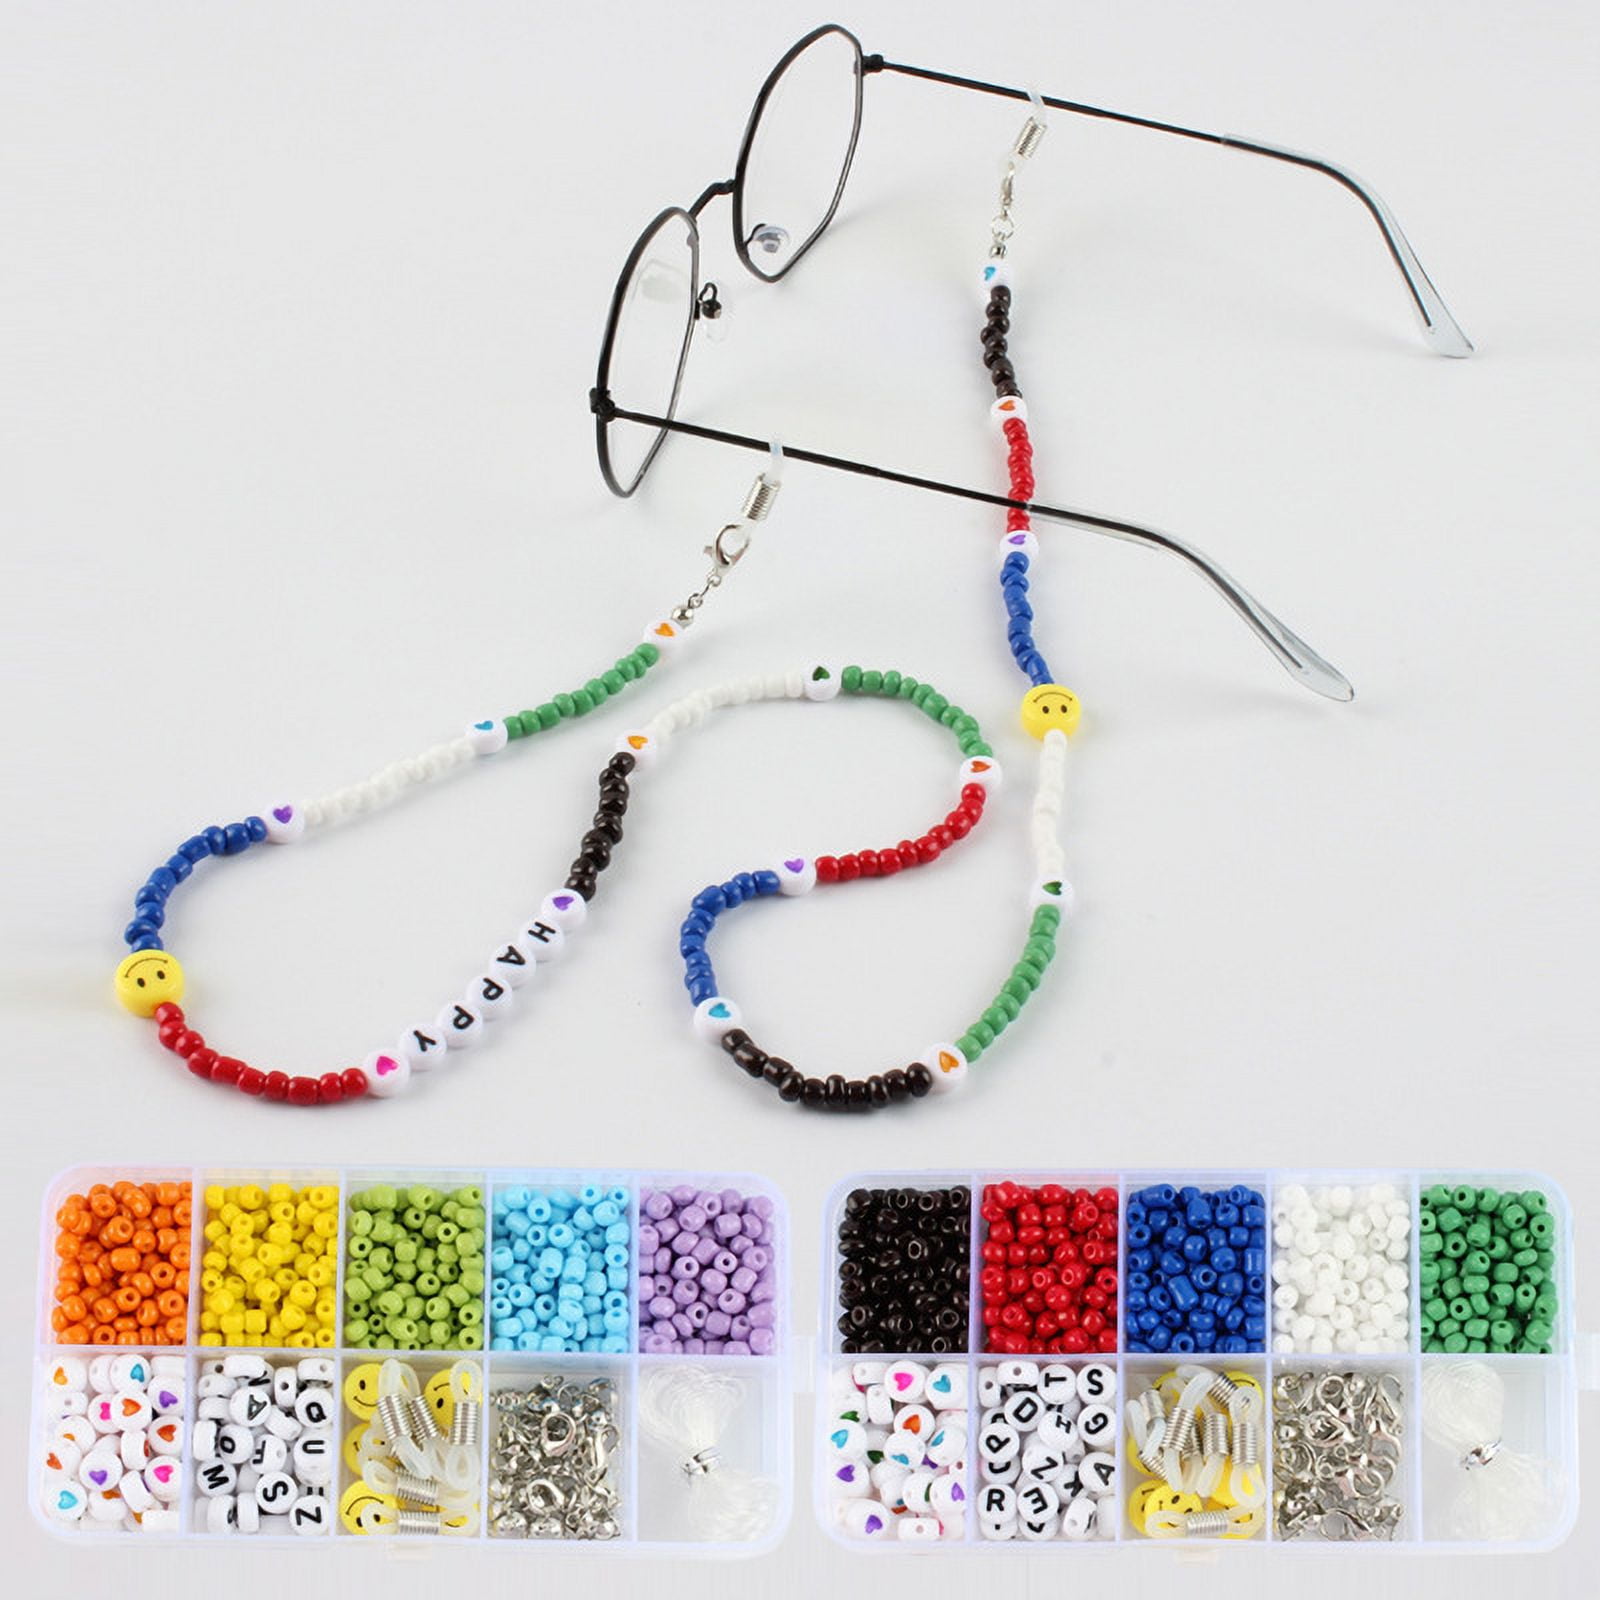 Fieldoo Feildoo DIY Handmade Beading Kit Beads Bracelet Jewelry Making Craft Rainbow Bead Box,15 Grid 3mm Rice Beads with Accessories, Women's